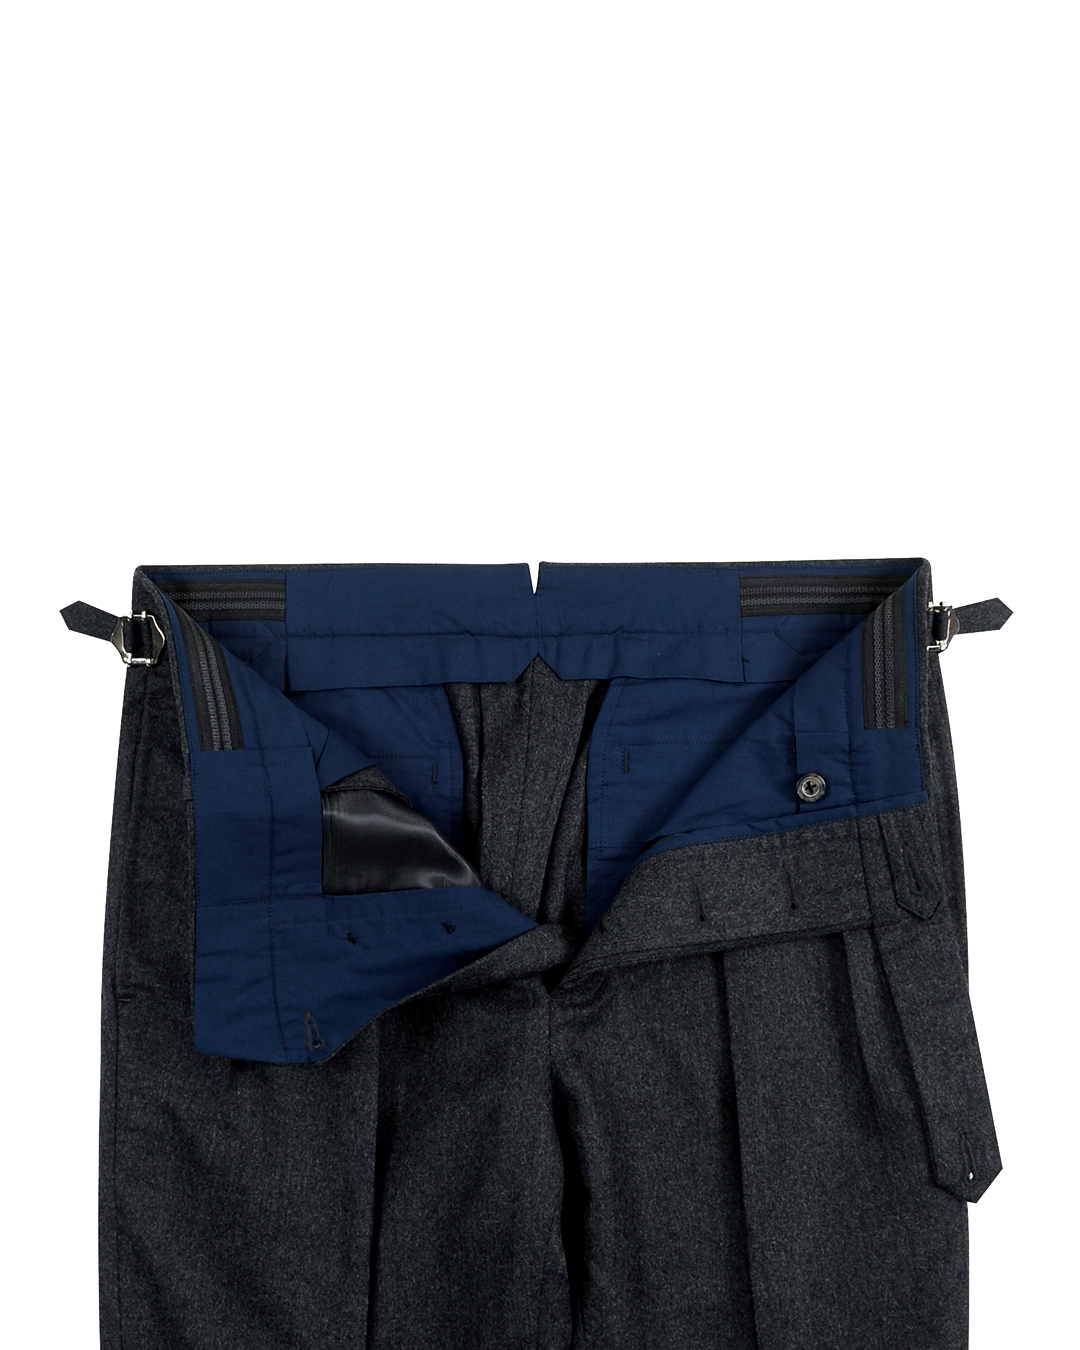 Vitale Barberis Canonico - Flannels  Mid Grey  High Waisted Pant